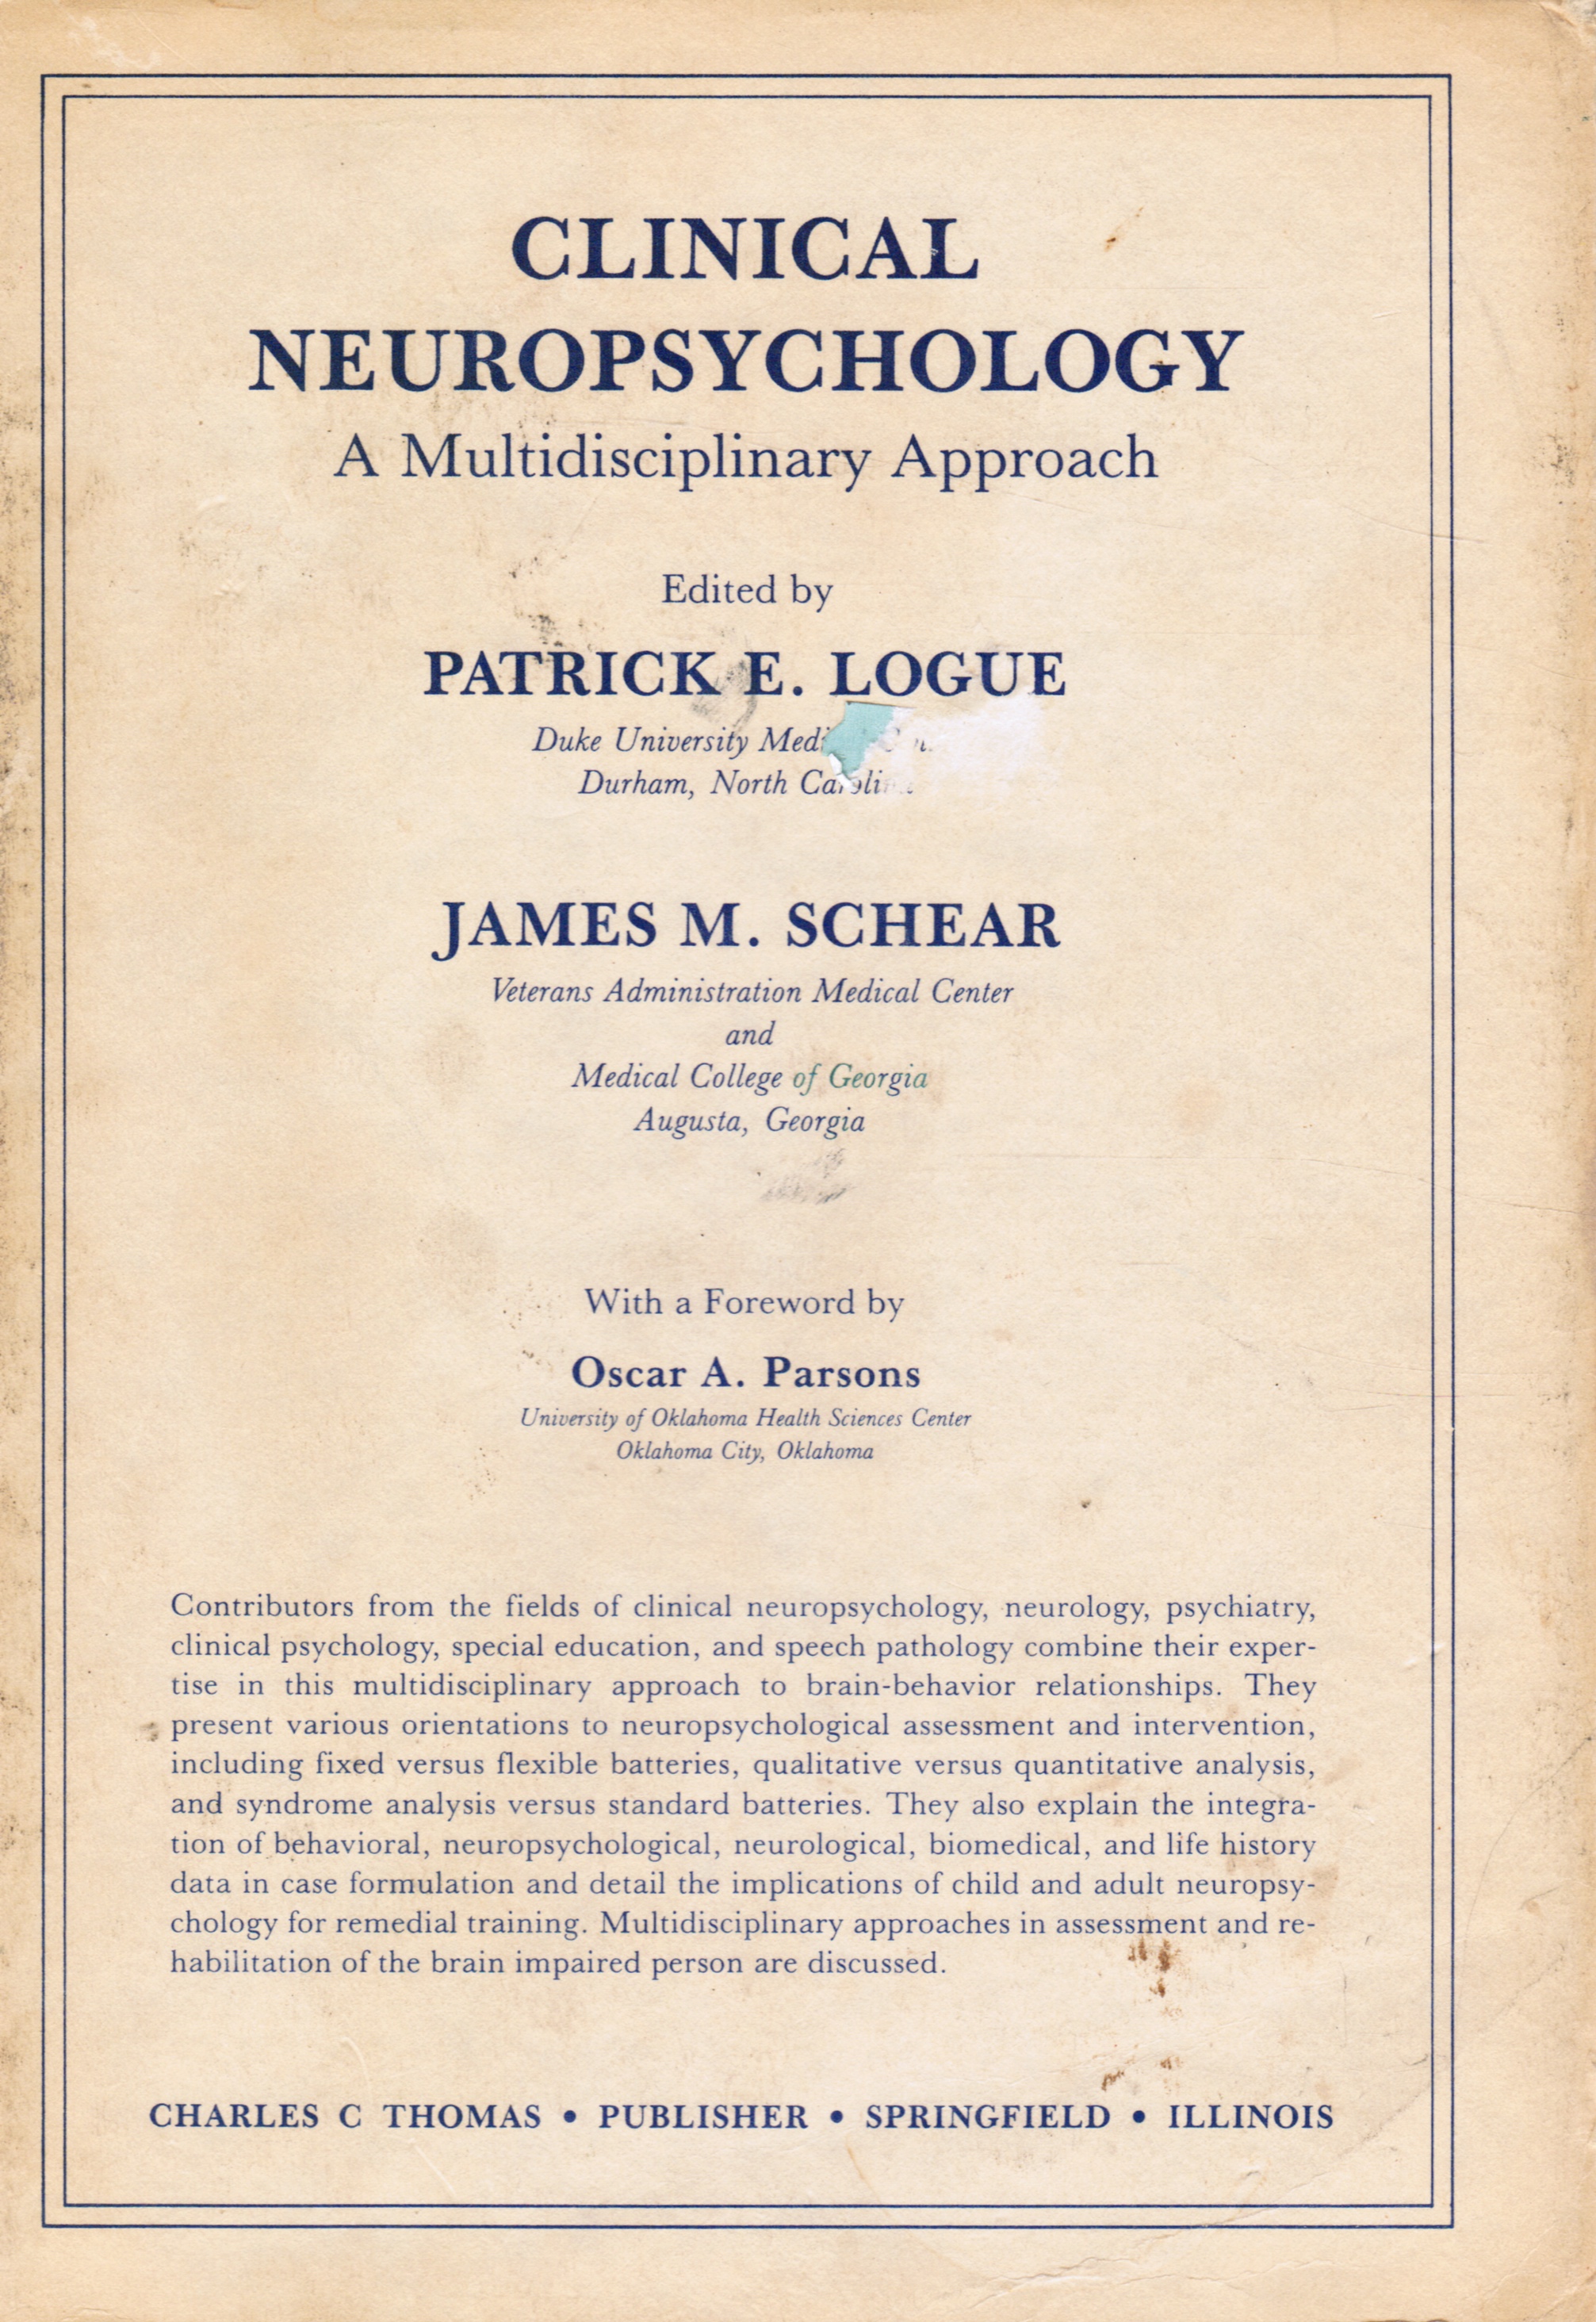 LOGUE, PATRICK; JAMES E. SHEAR (EDITED BY) - Clinical Neuropsychology